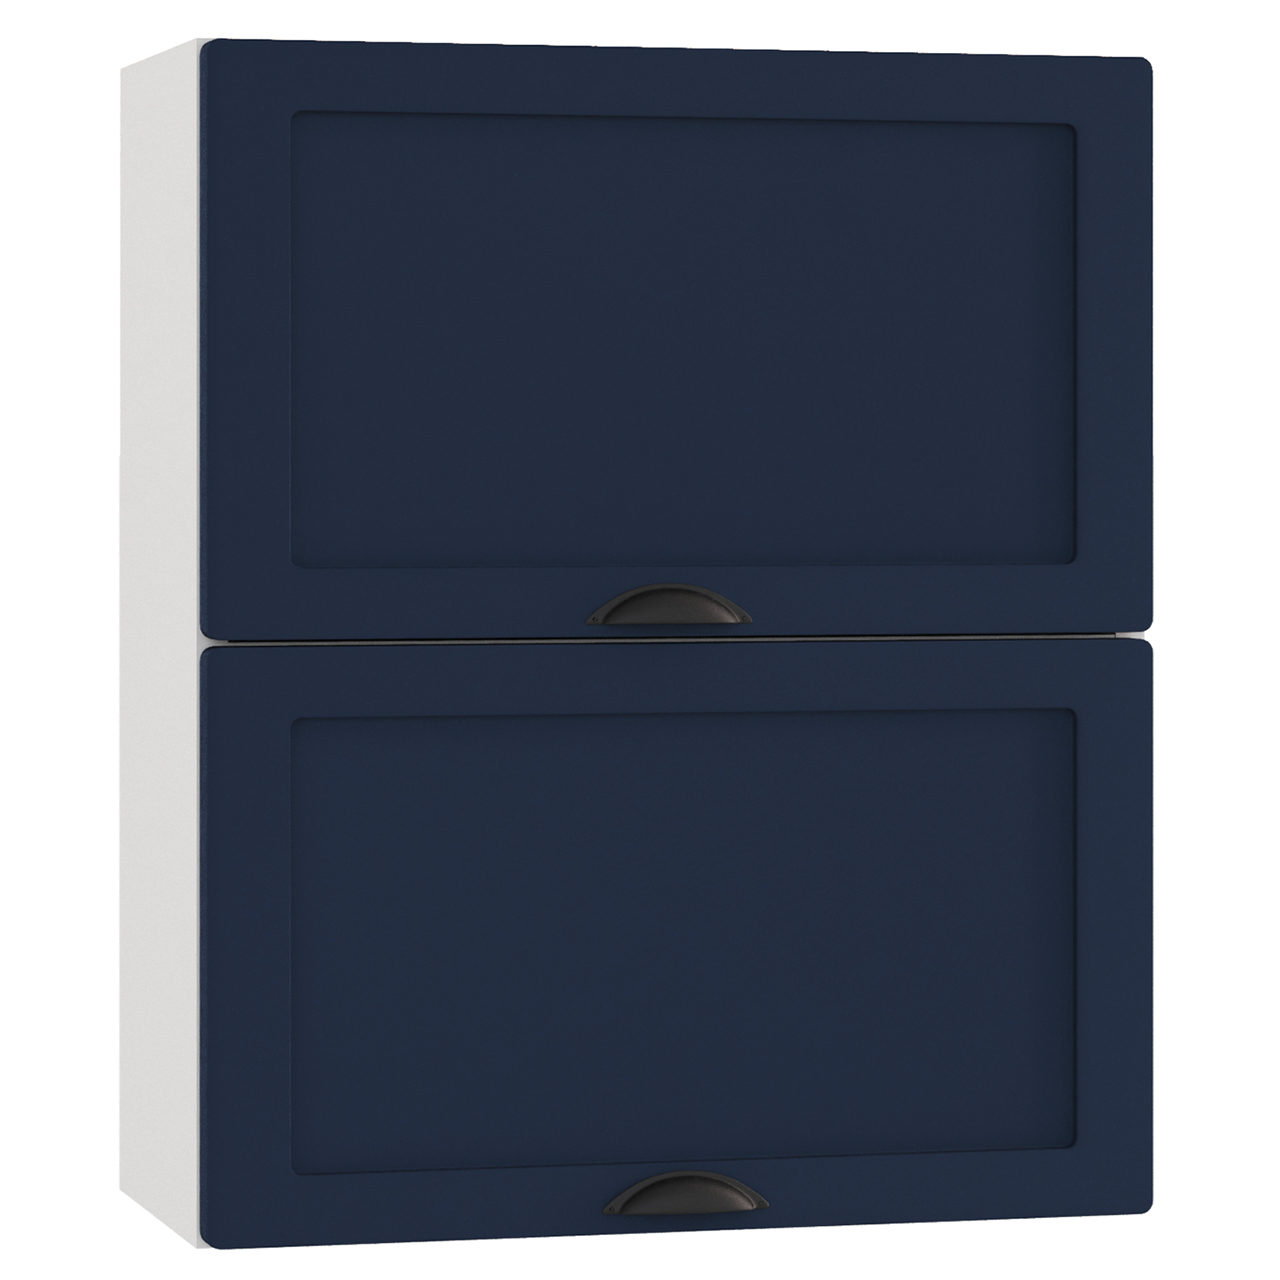 Závěsná skříňka ADELE W80 GRF/2 námořnická modrá